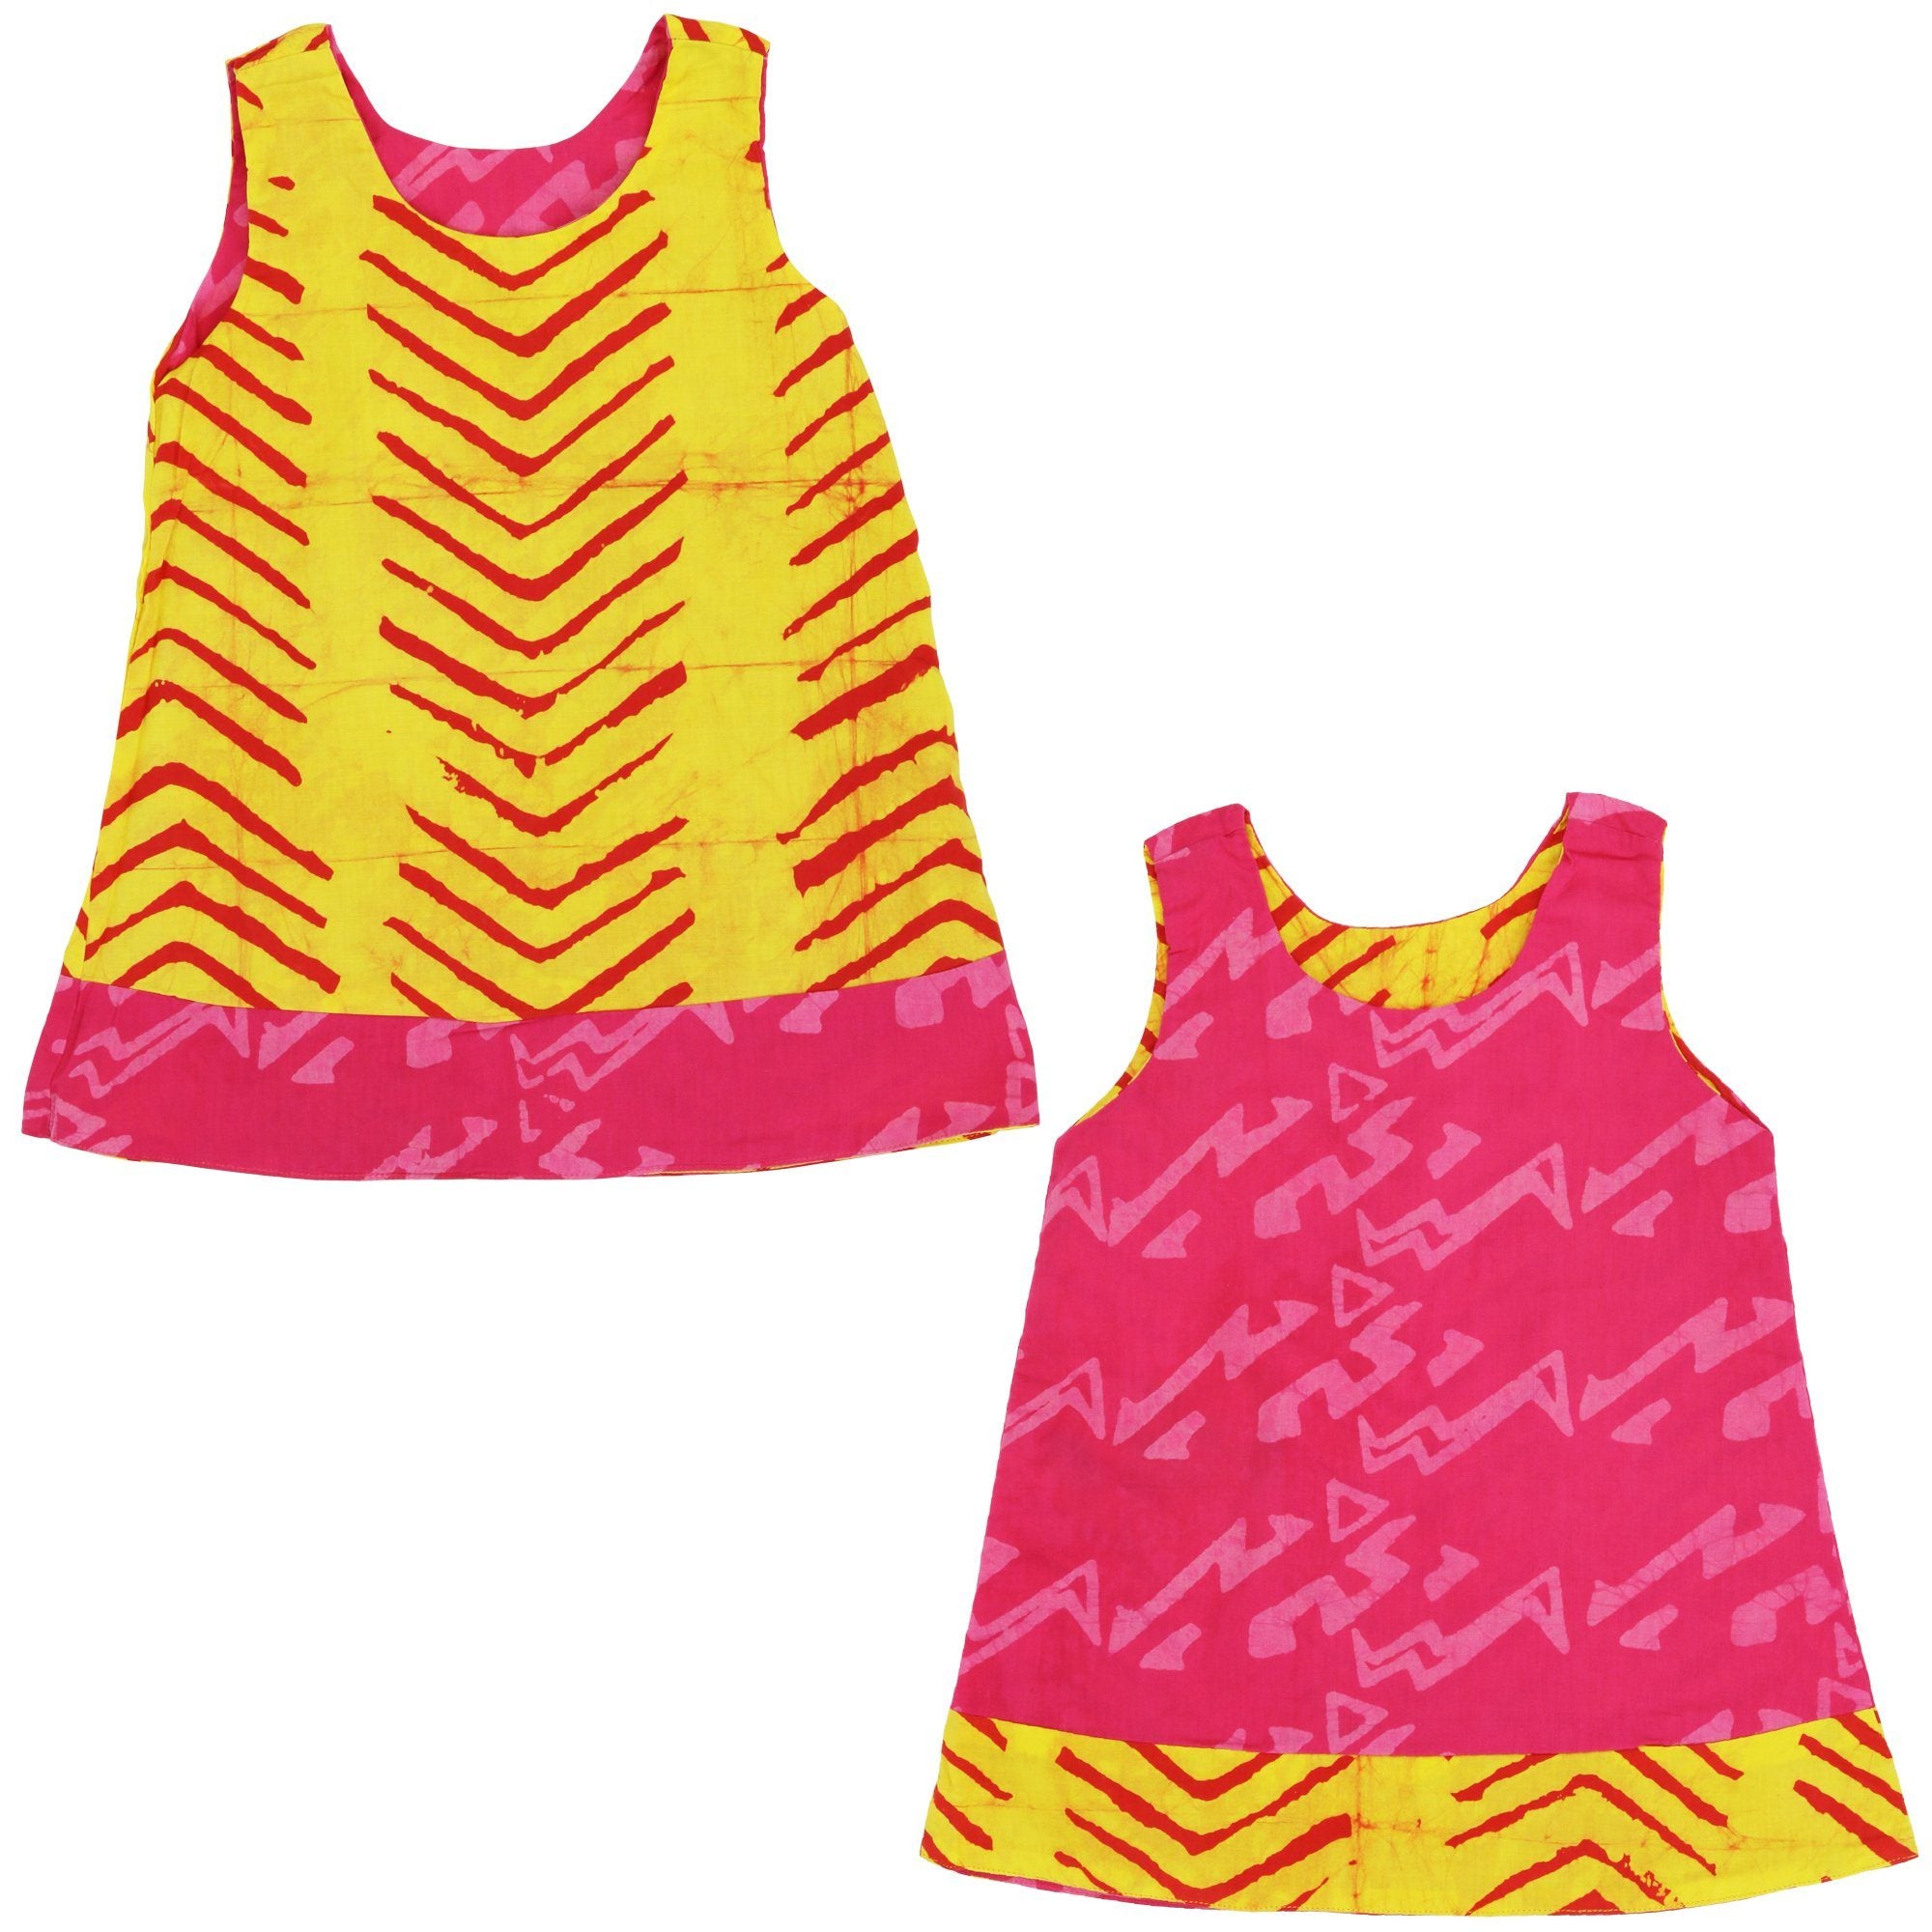 Ghana Batik Girls' Reversible Dress - Hot Pink Zig Zag - 12 Months